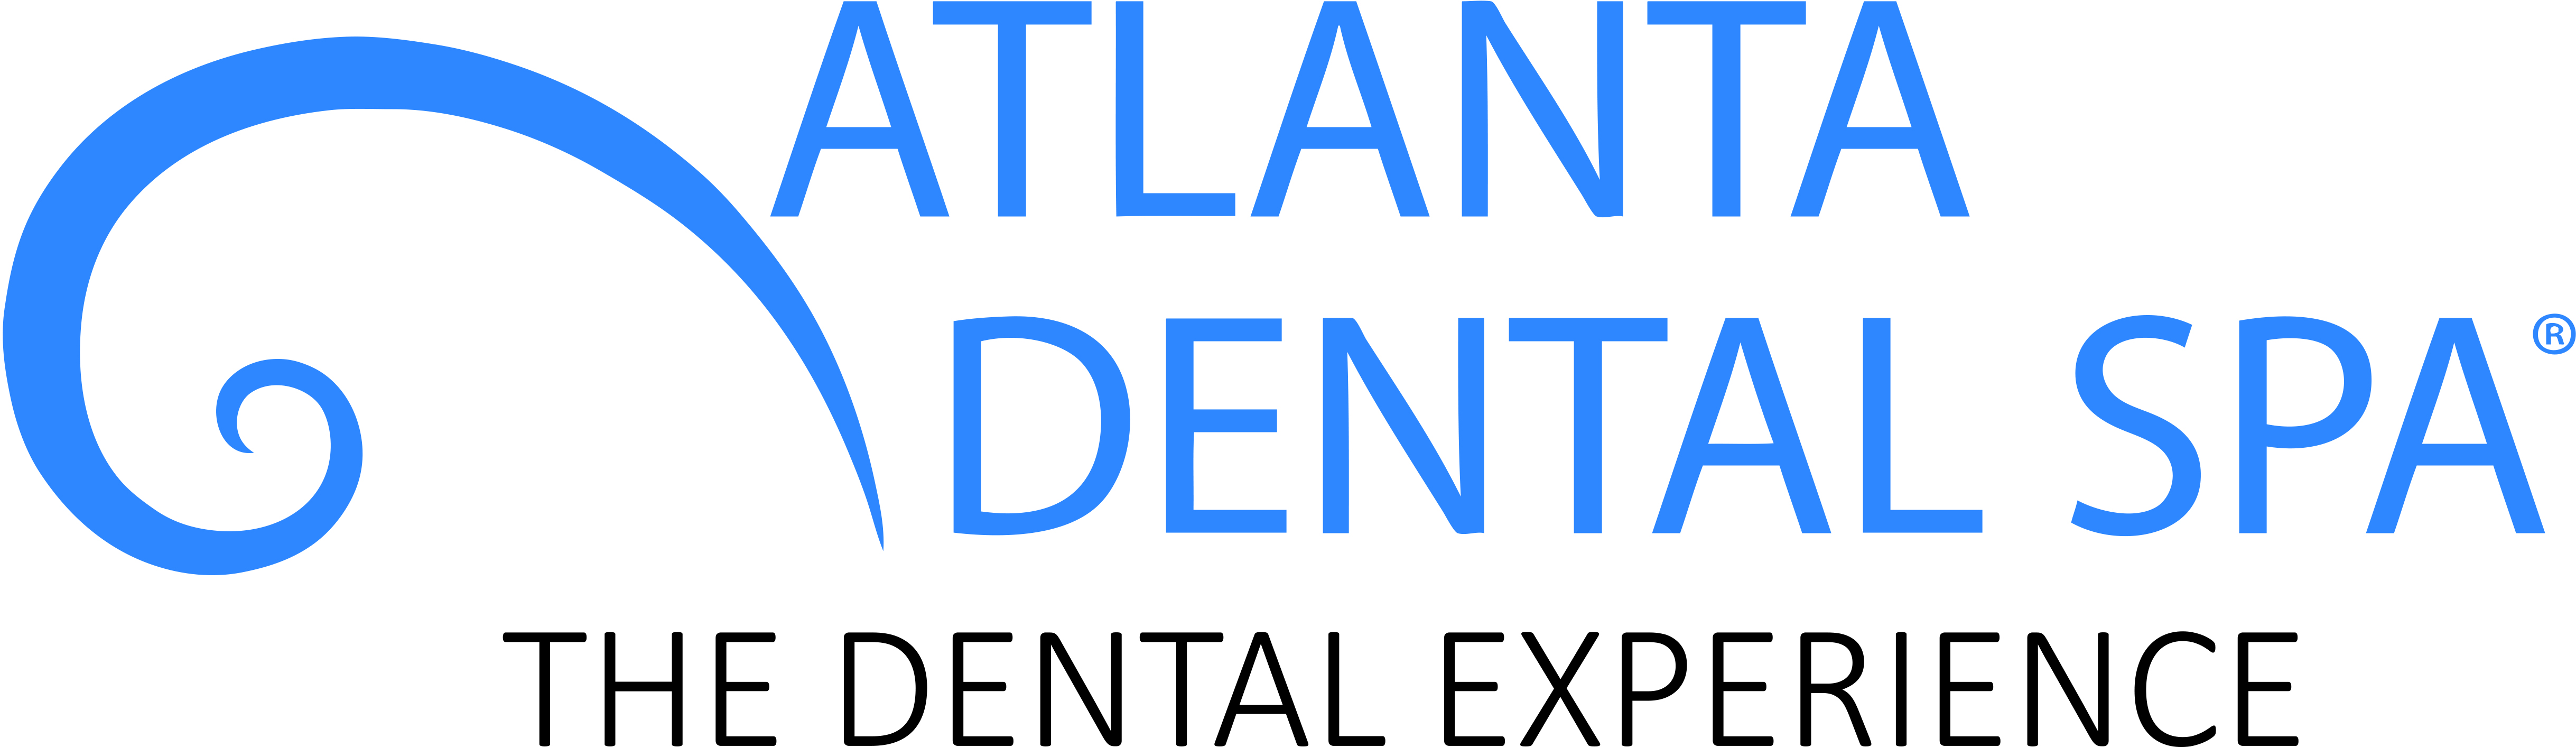 atlanta dental